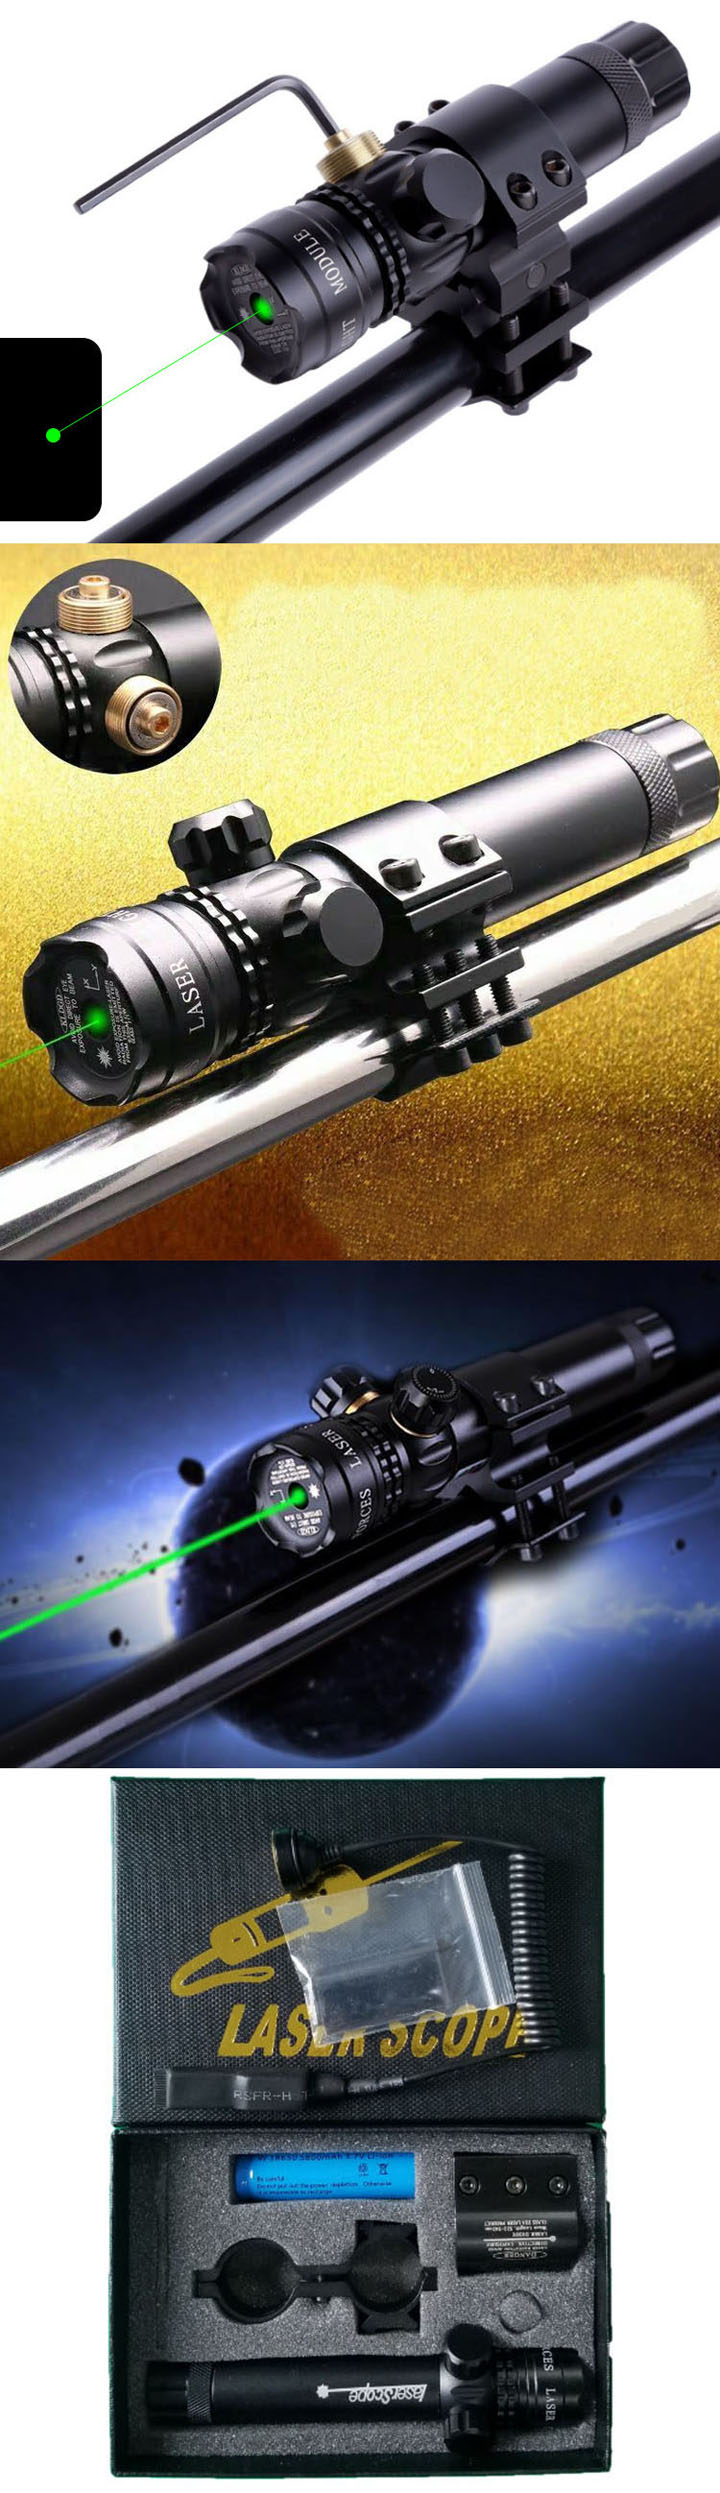 mirino laser verde 520nm